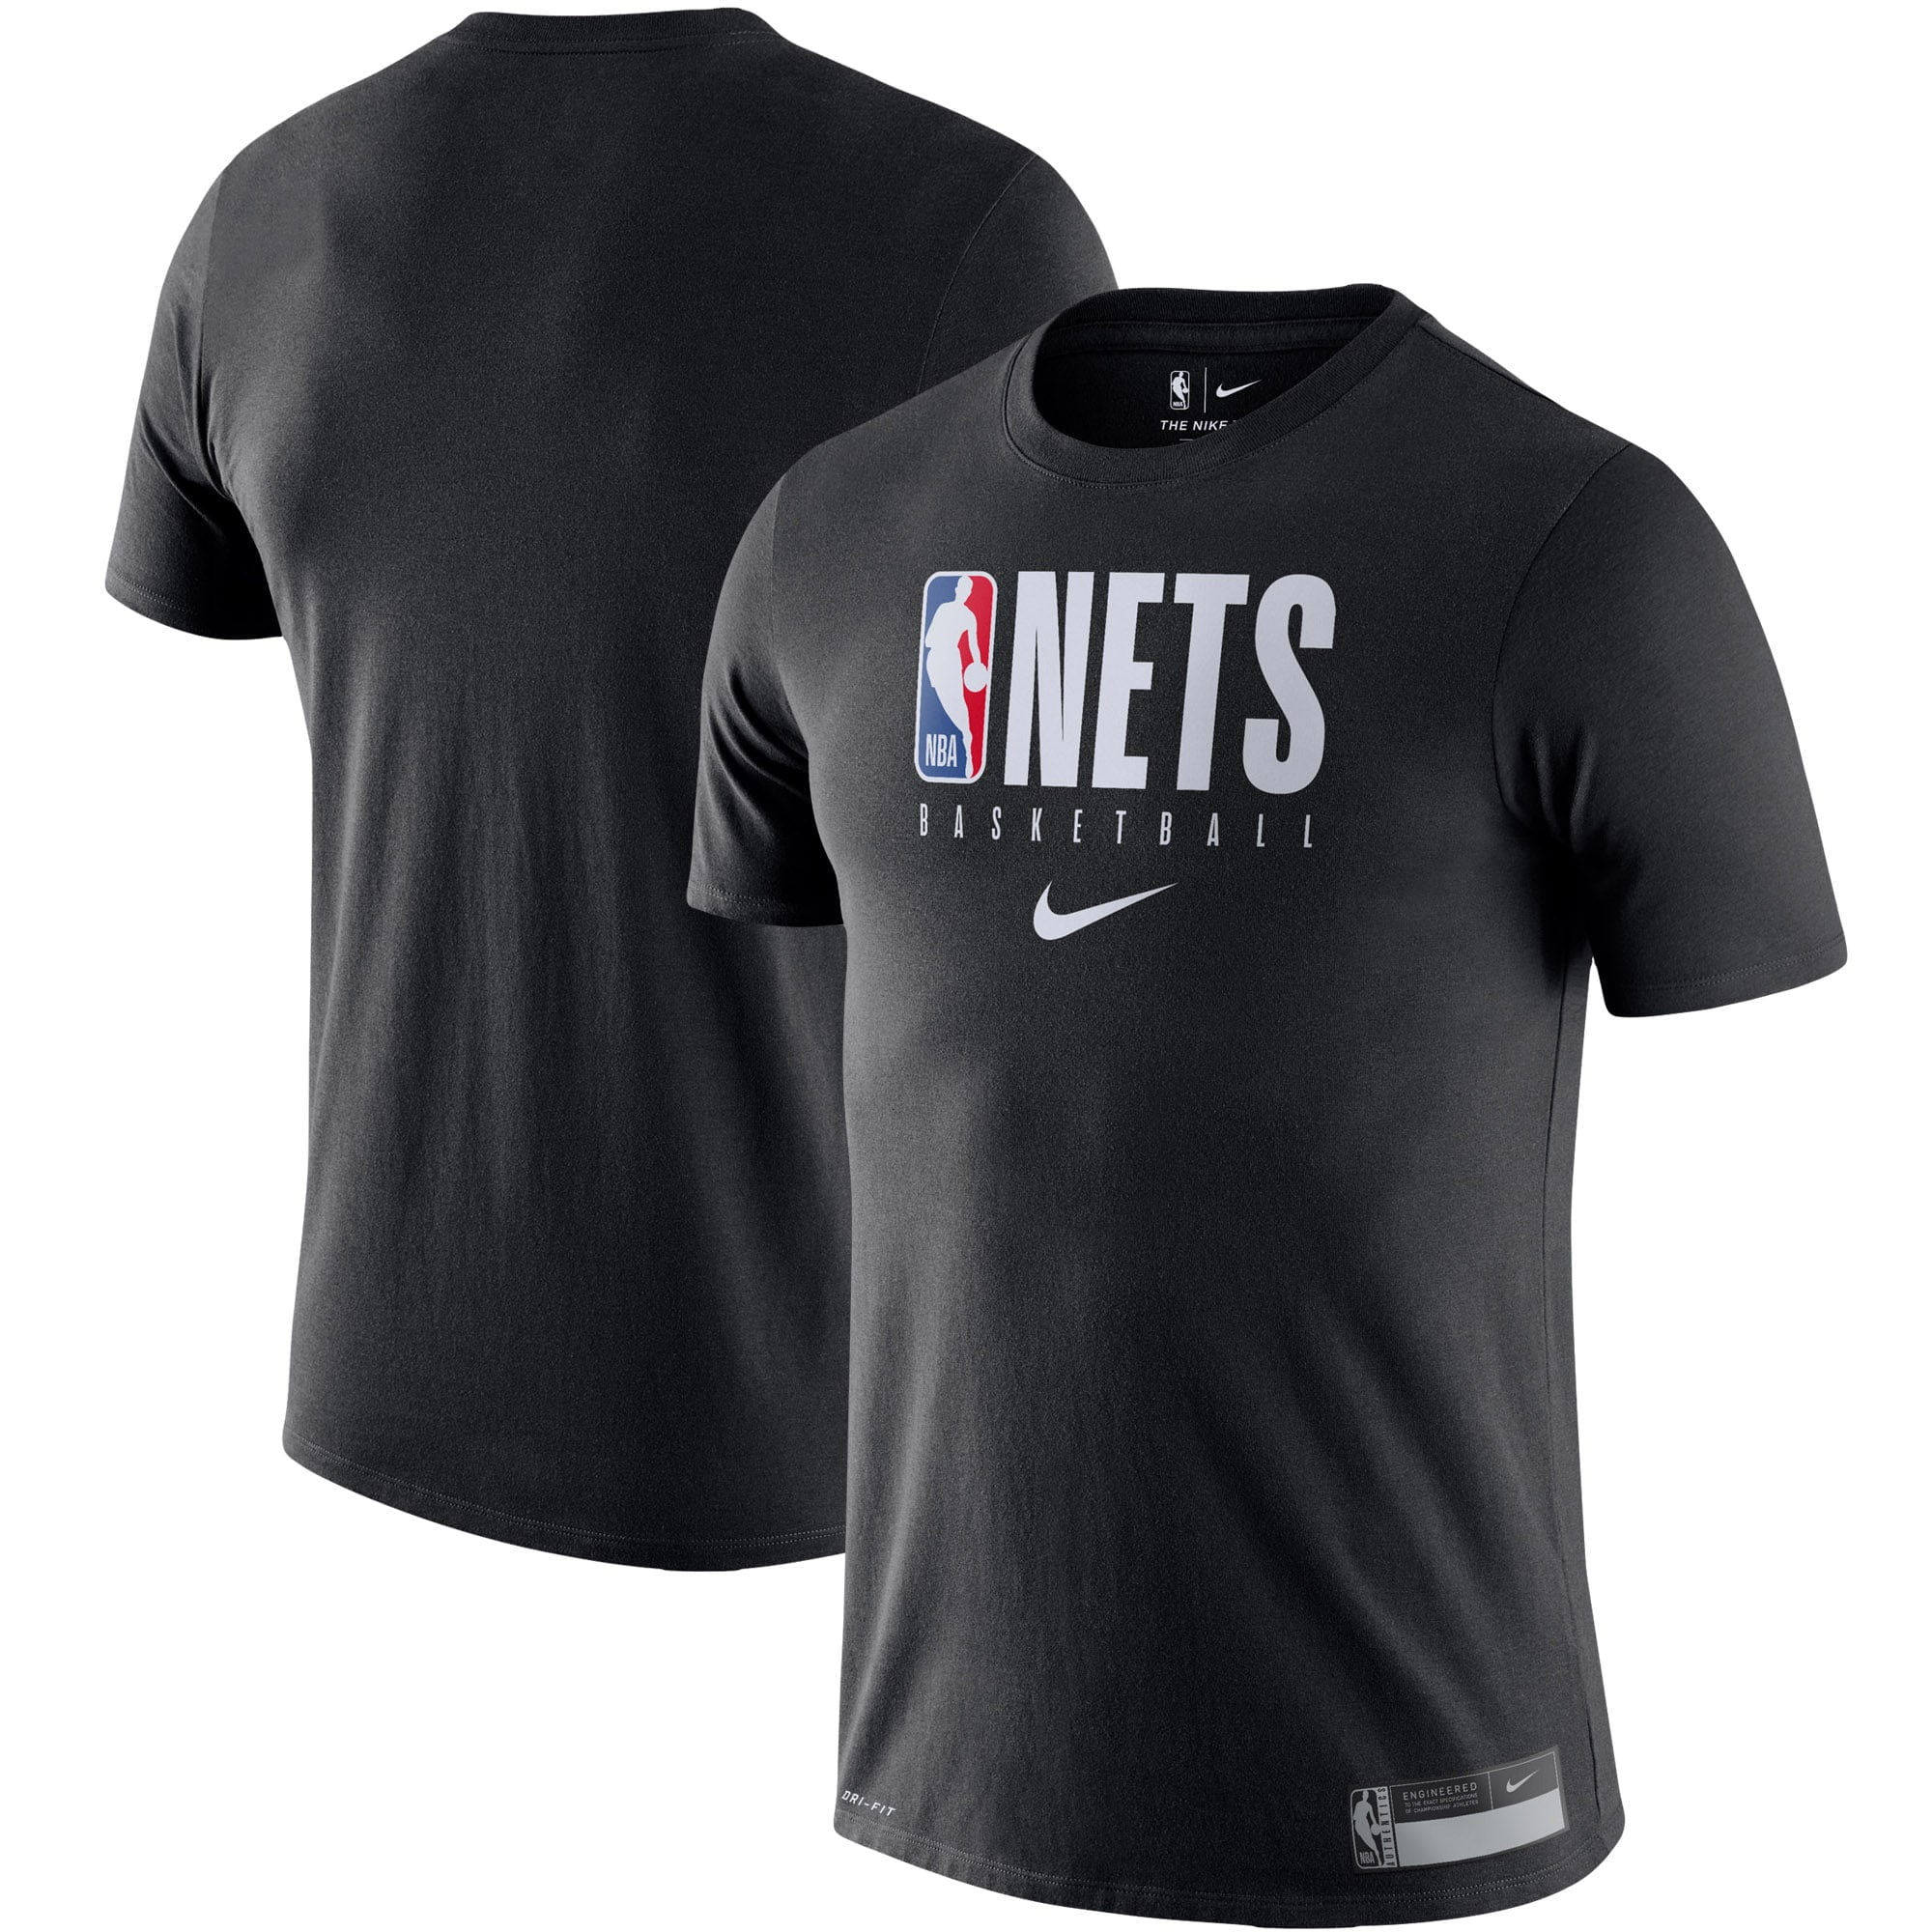 black BROOKLYN NETS basketball performance t-shirt